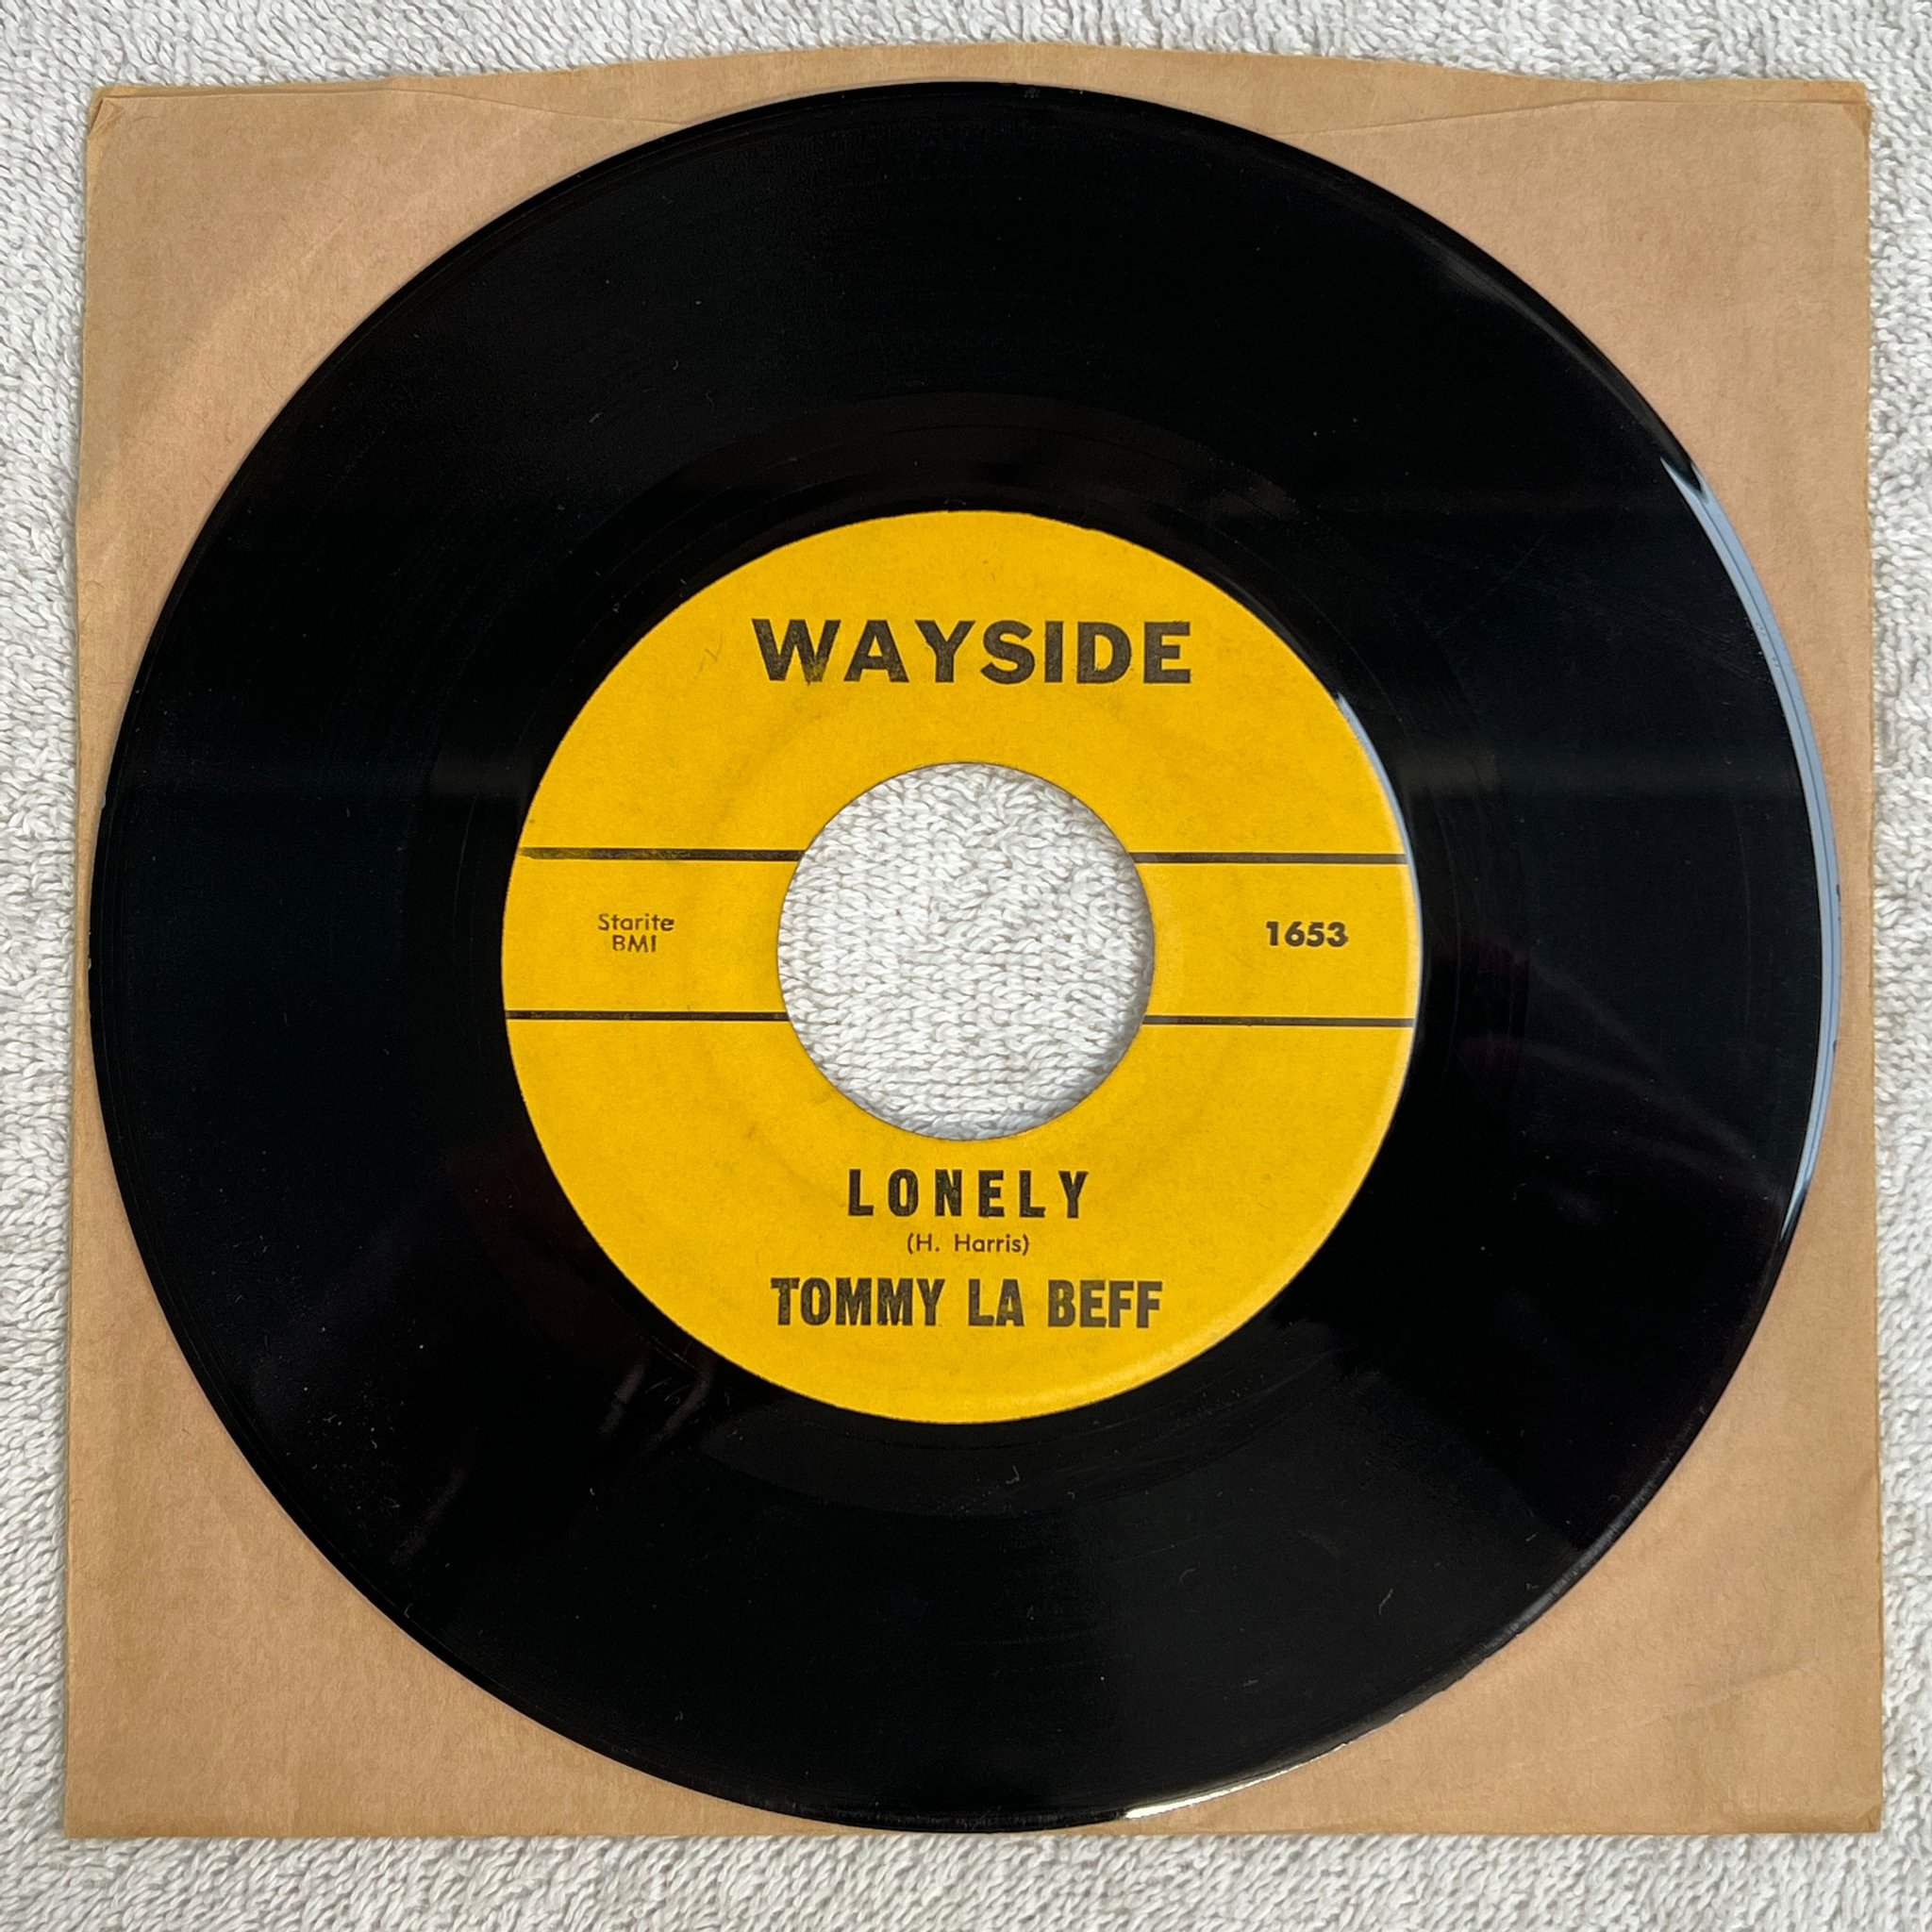 Omslagsbild för skivan TOMMY LA BEFF Lonely 7"single US WAYSIDE 1654 rockabilly